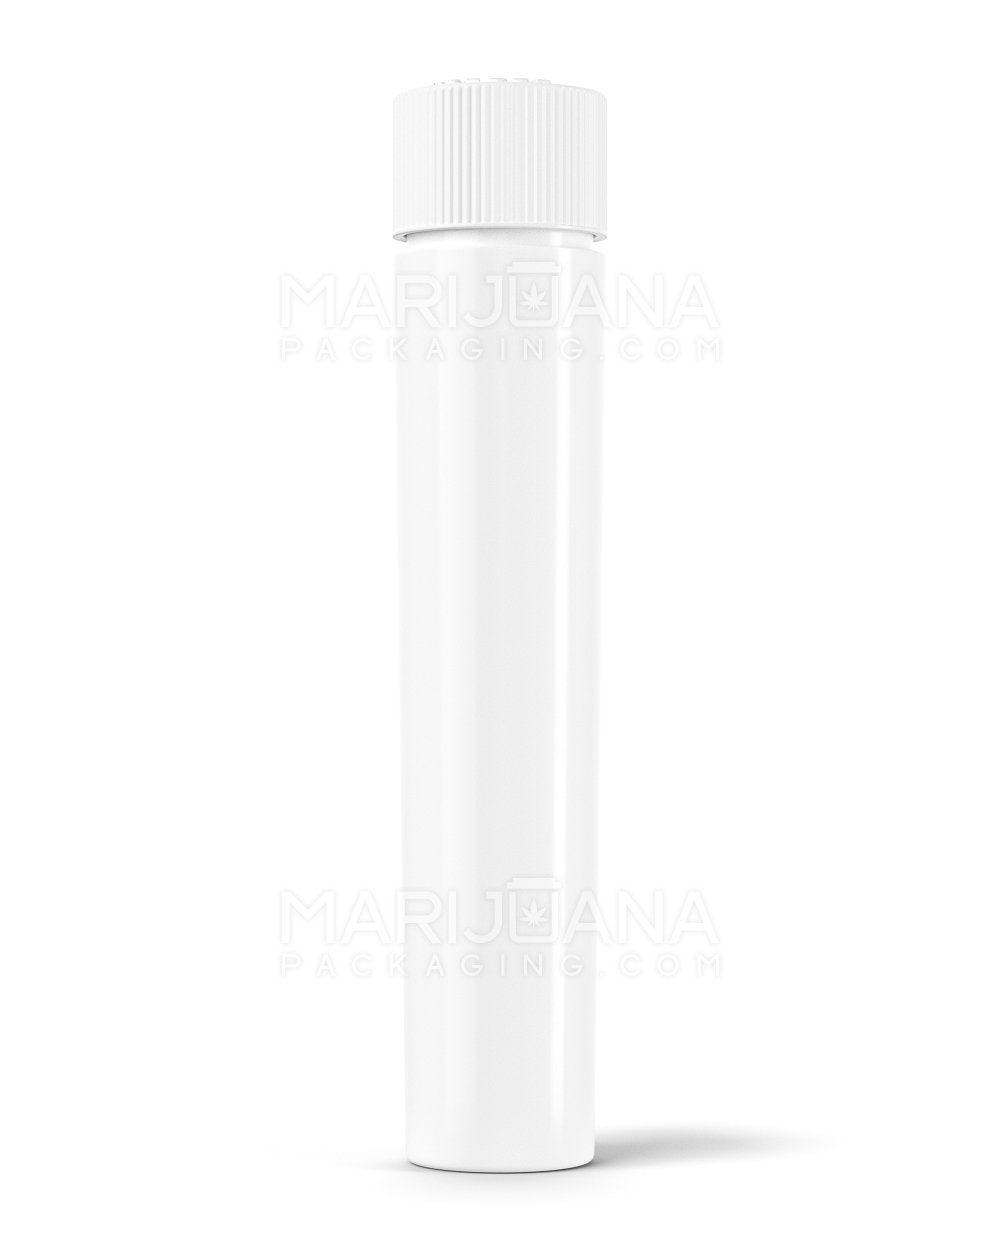 Child Resistant Push Down & Turn Vape Cartridge Container | 72mm - White Plastic | Sample - 1